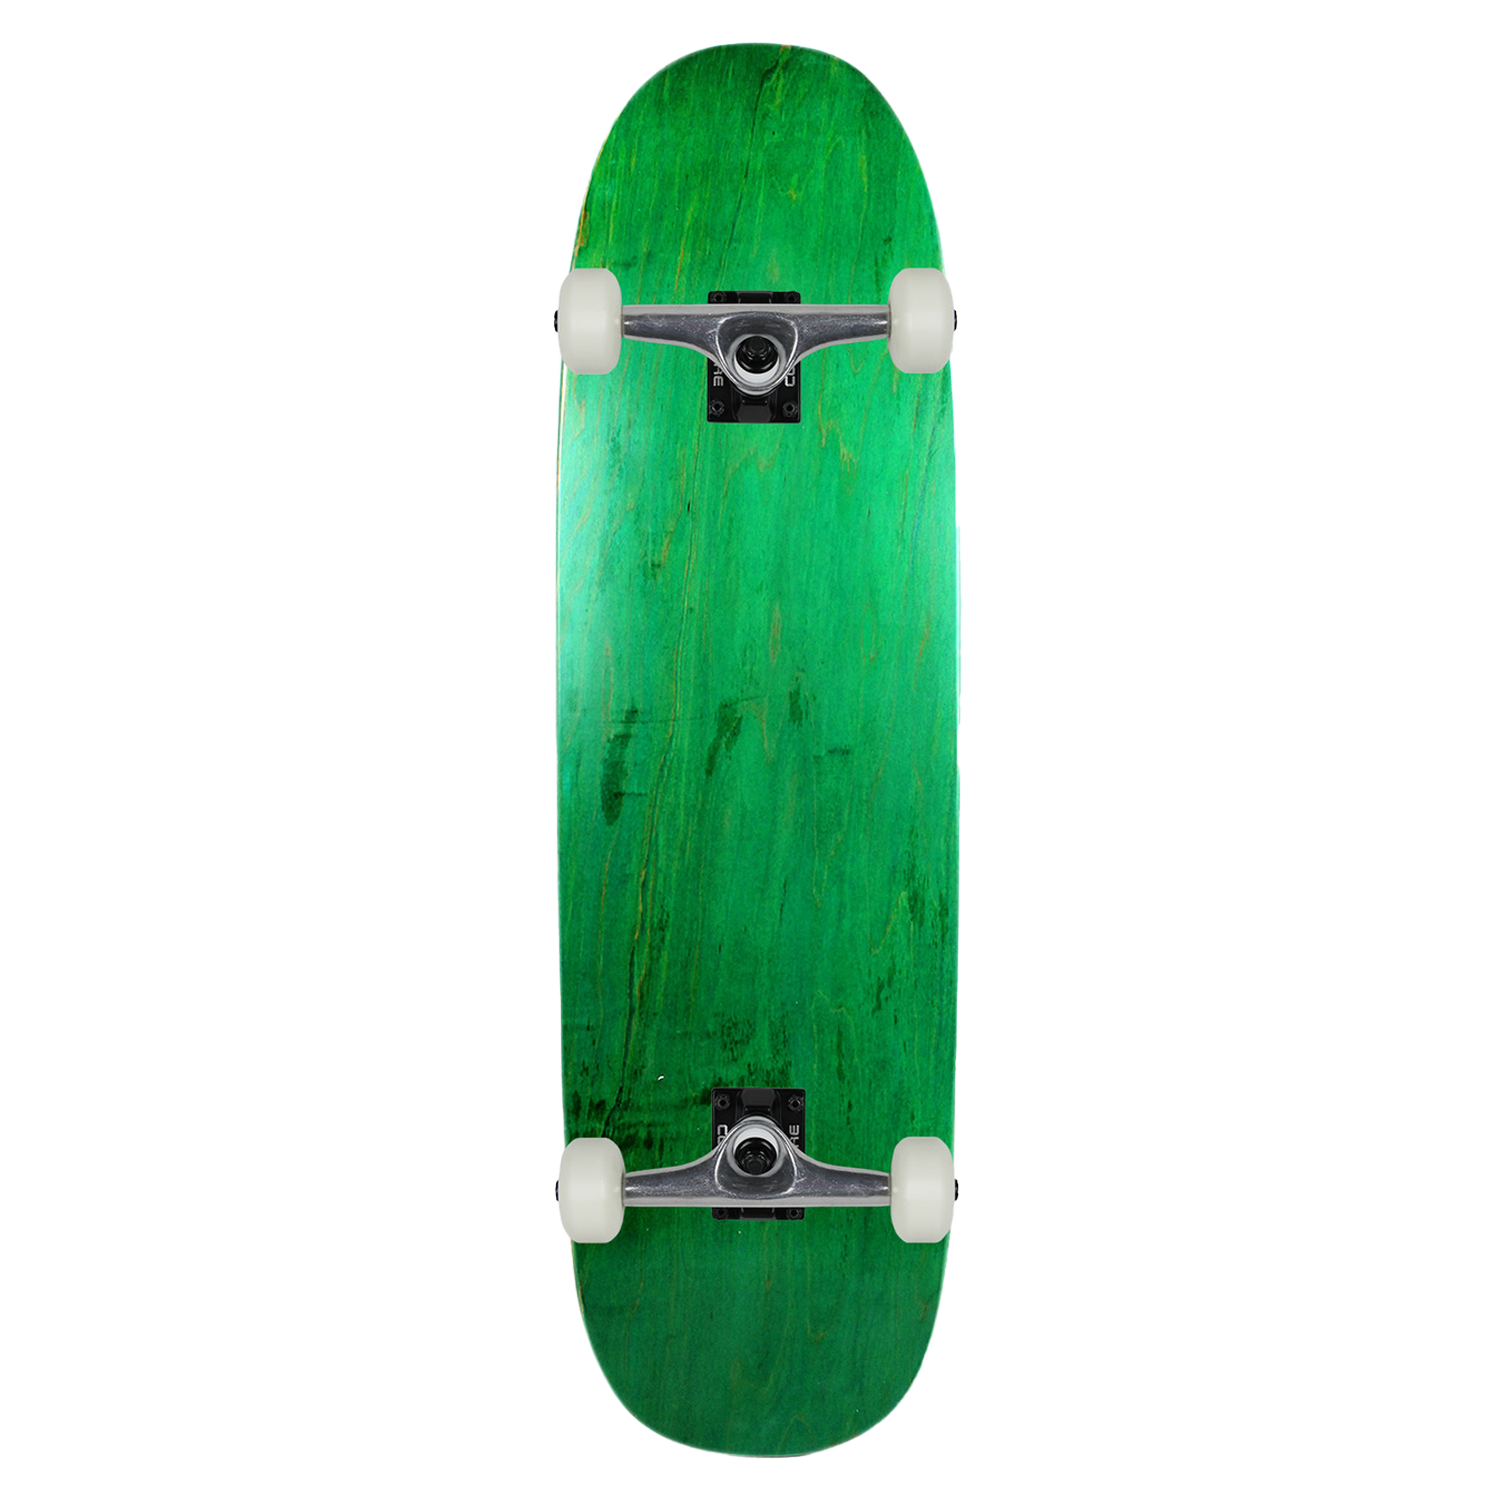 Moose Skateboard Old School Complete Blunt Nose Popsicle Stain Green 8.75in x 32.1in